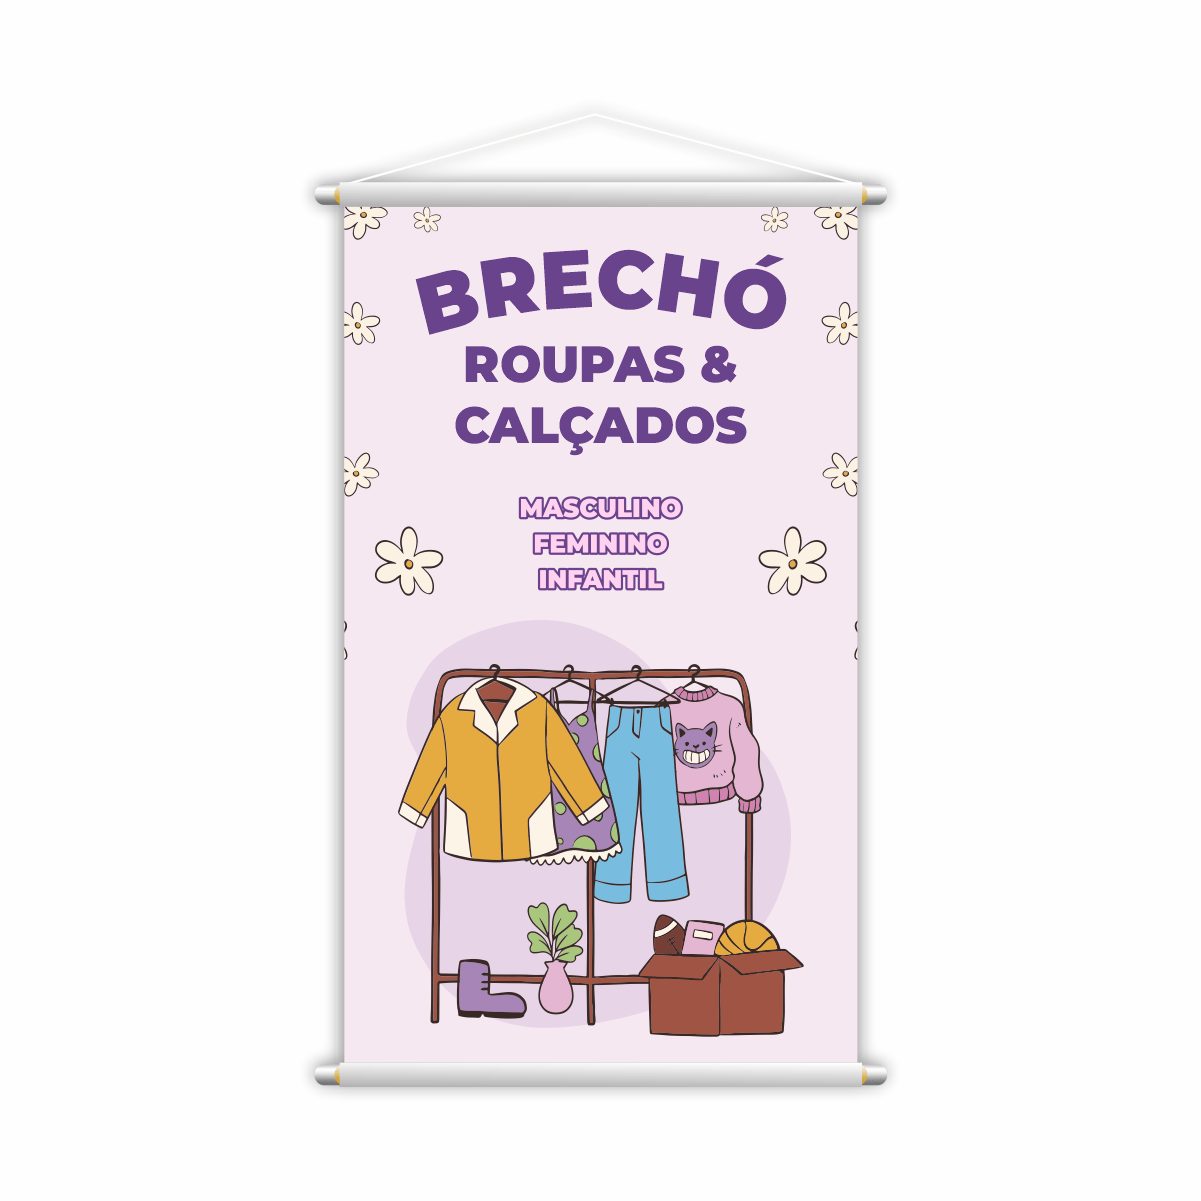 Banner Brechó Masculino, Feminino, Roupas de Calçados